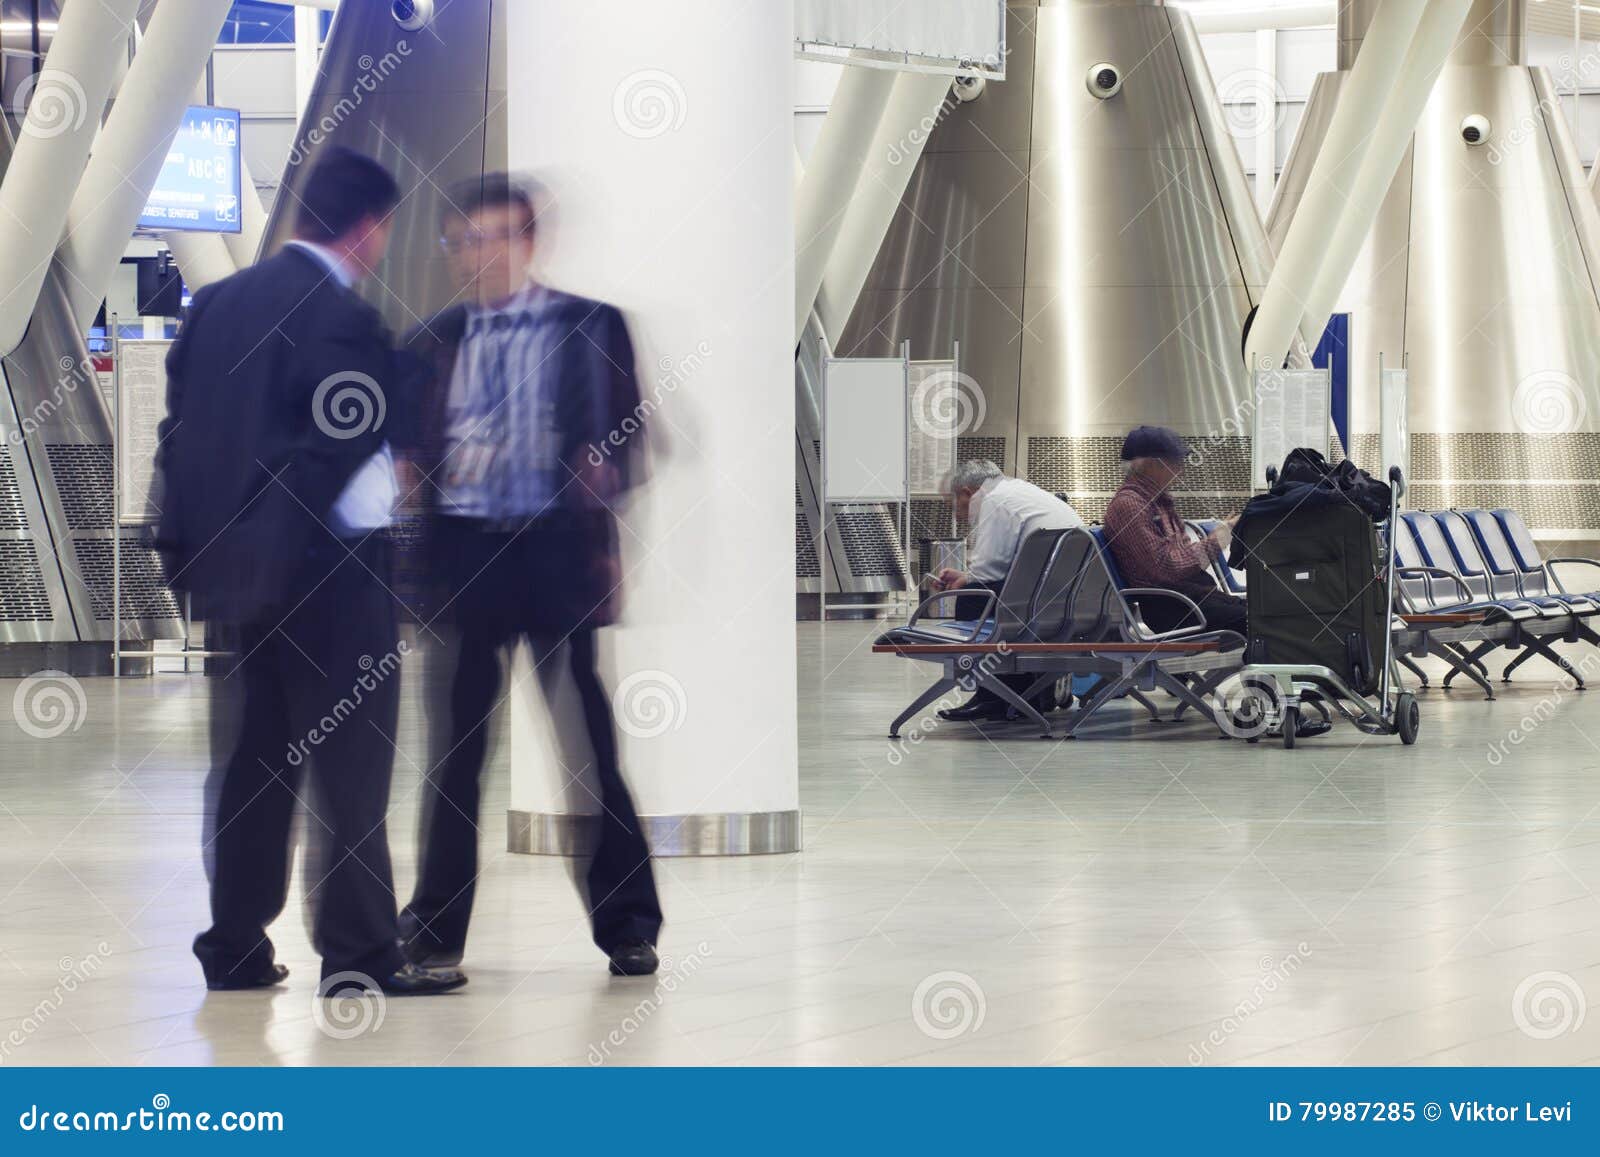 Airport Train Station Departure Terminal Stock Image - Image of transit ...